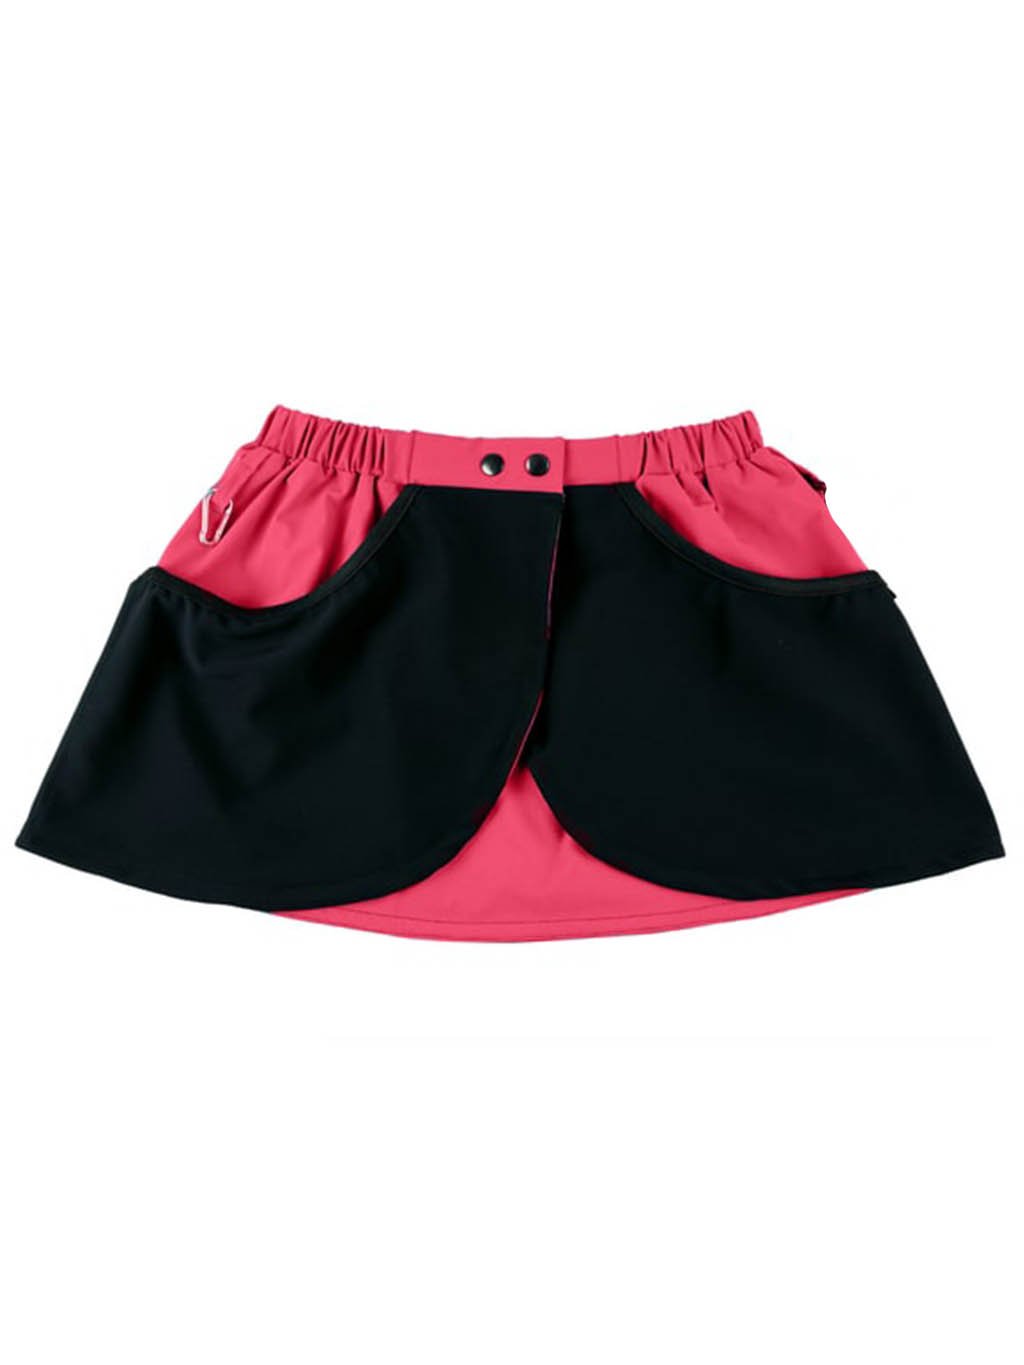 Training skirt-kilt - customized